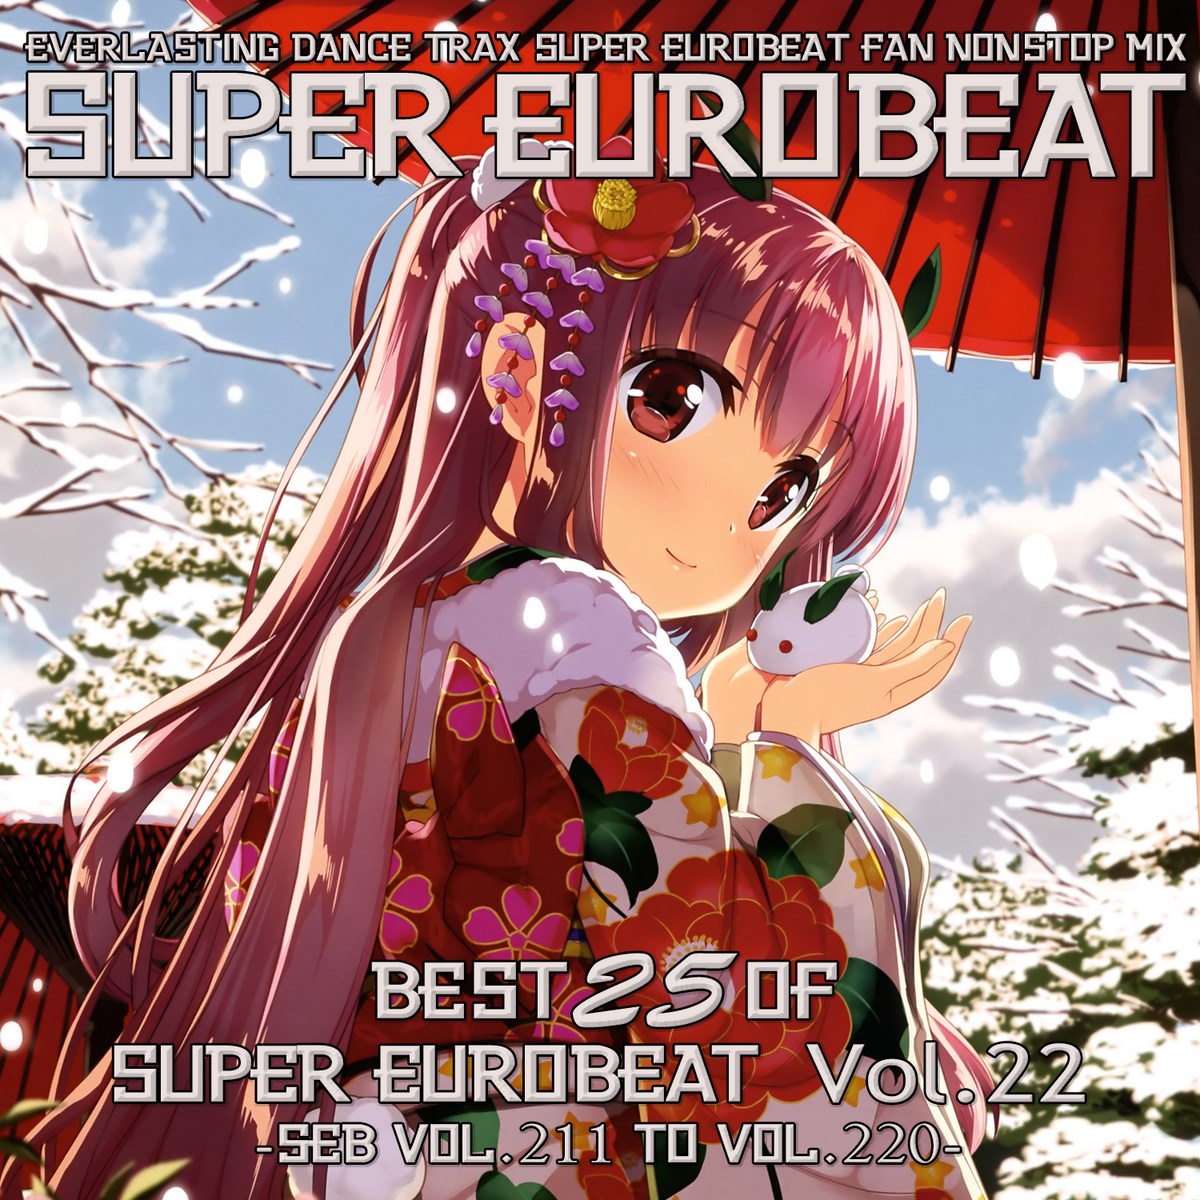 Tgcd 0034 Best 25 Of Super Eurobeat Vol 22 Seb Vol 211 To Vol 2 The Good Records